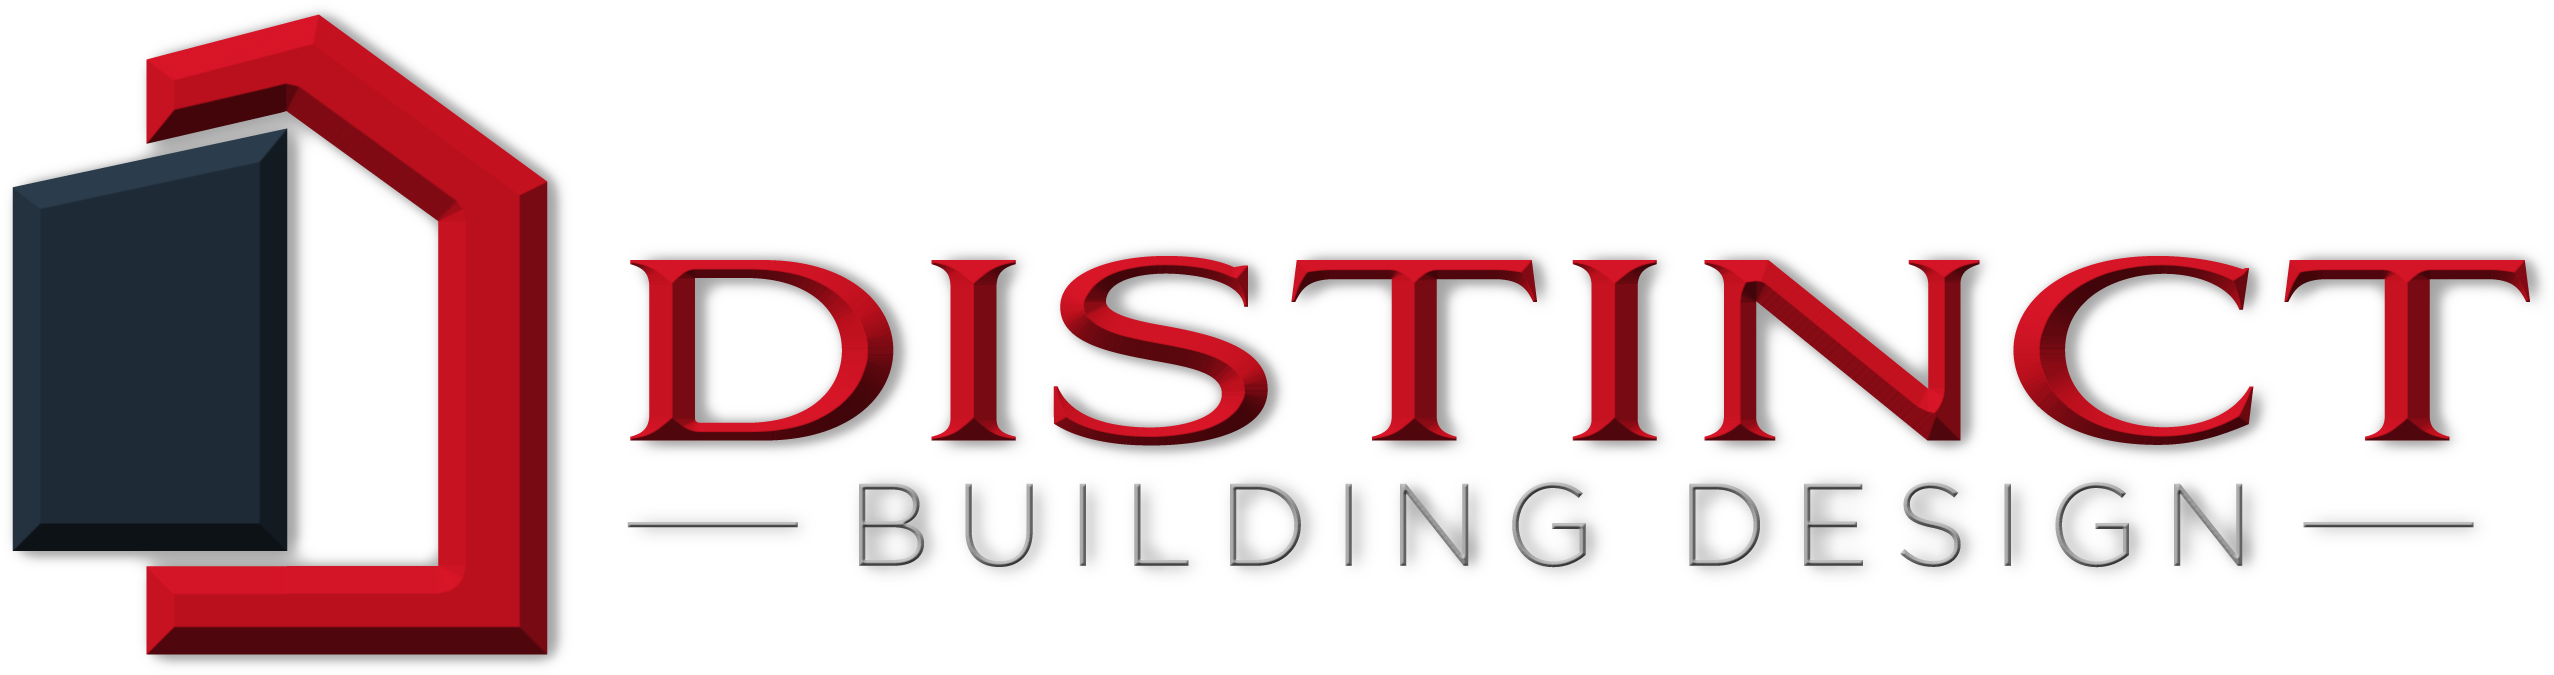 Distinct Building Design - Autoleads Logo (2600x800)